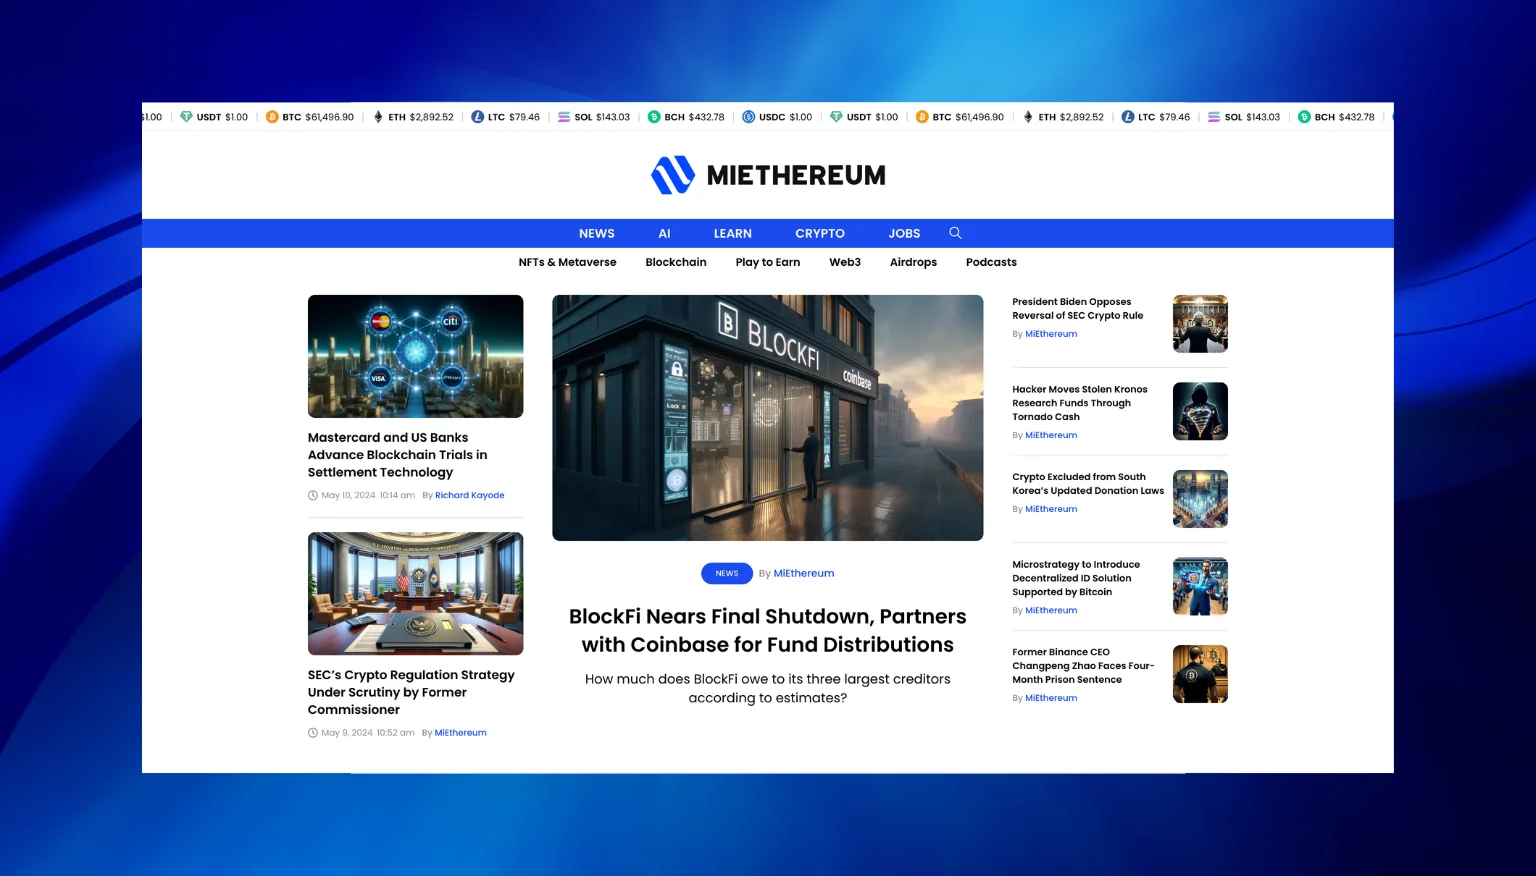 MiEthereum - Where to find remote blockchain jobs